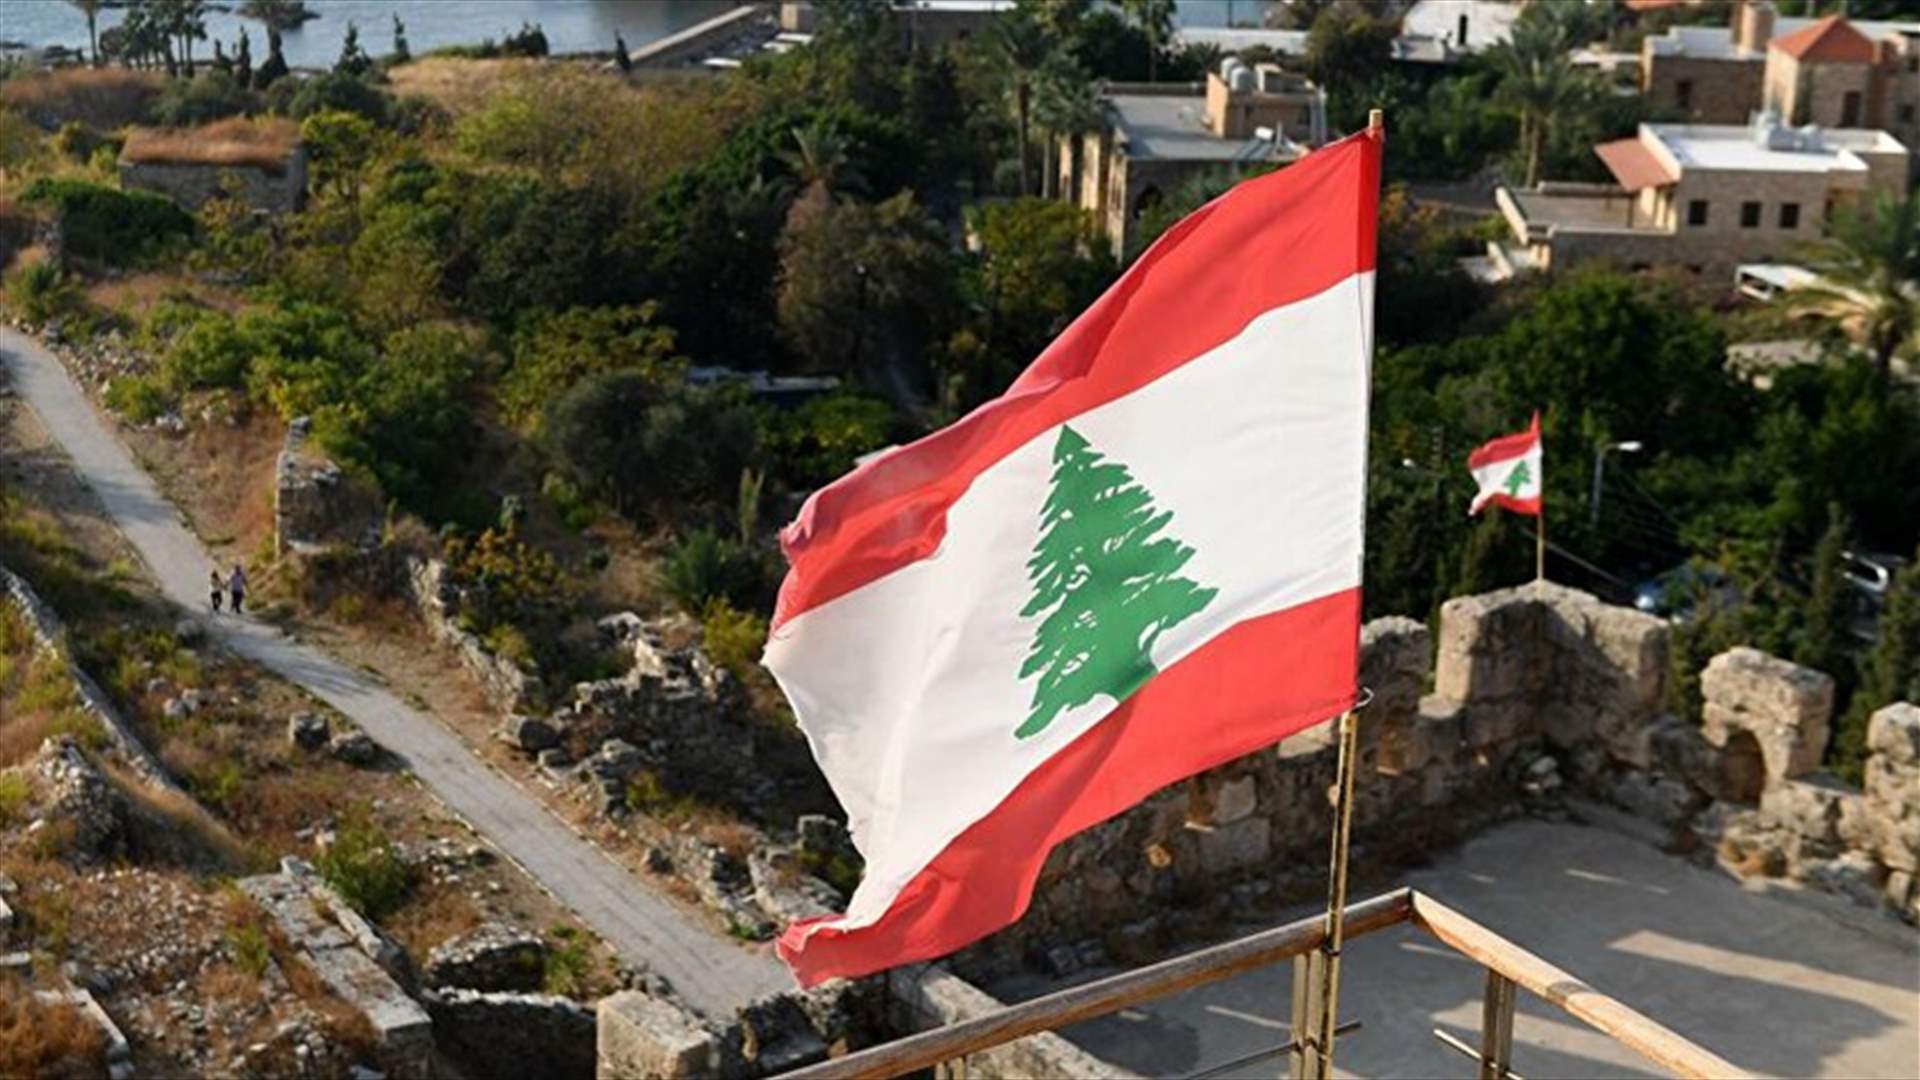 Israel-Lebanon maritime border talks postponed, officials say